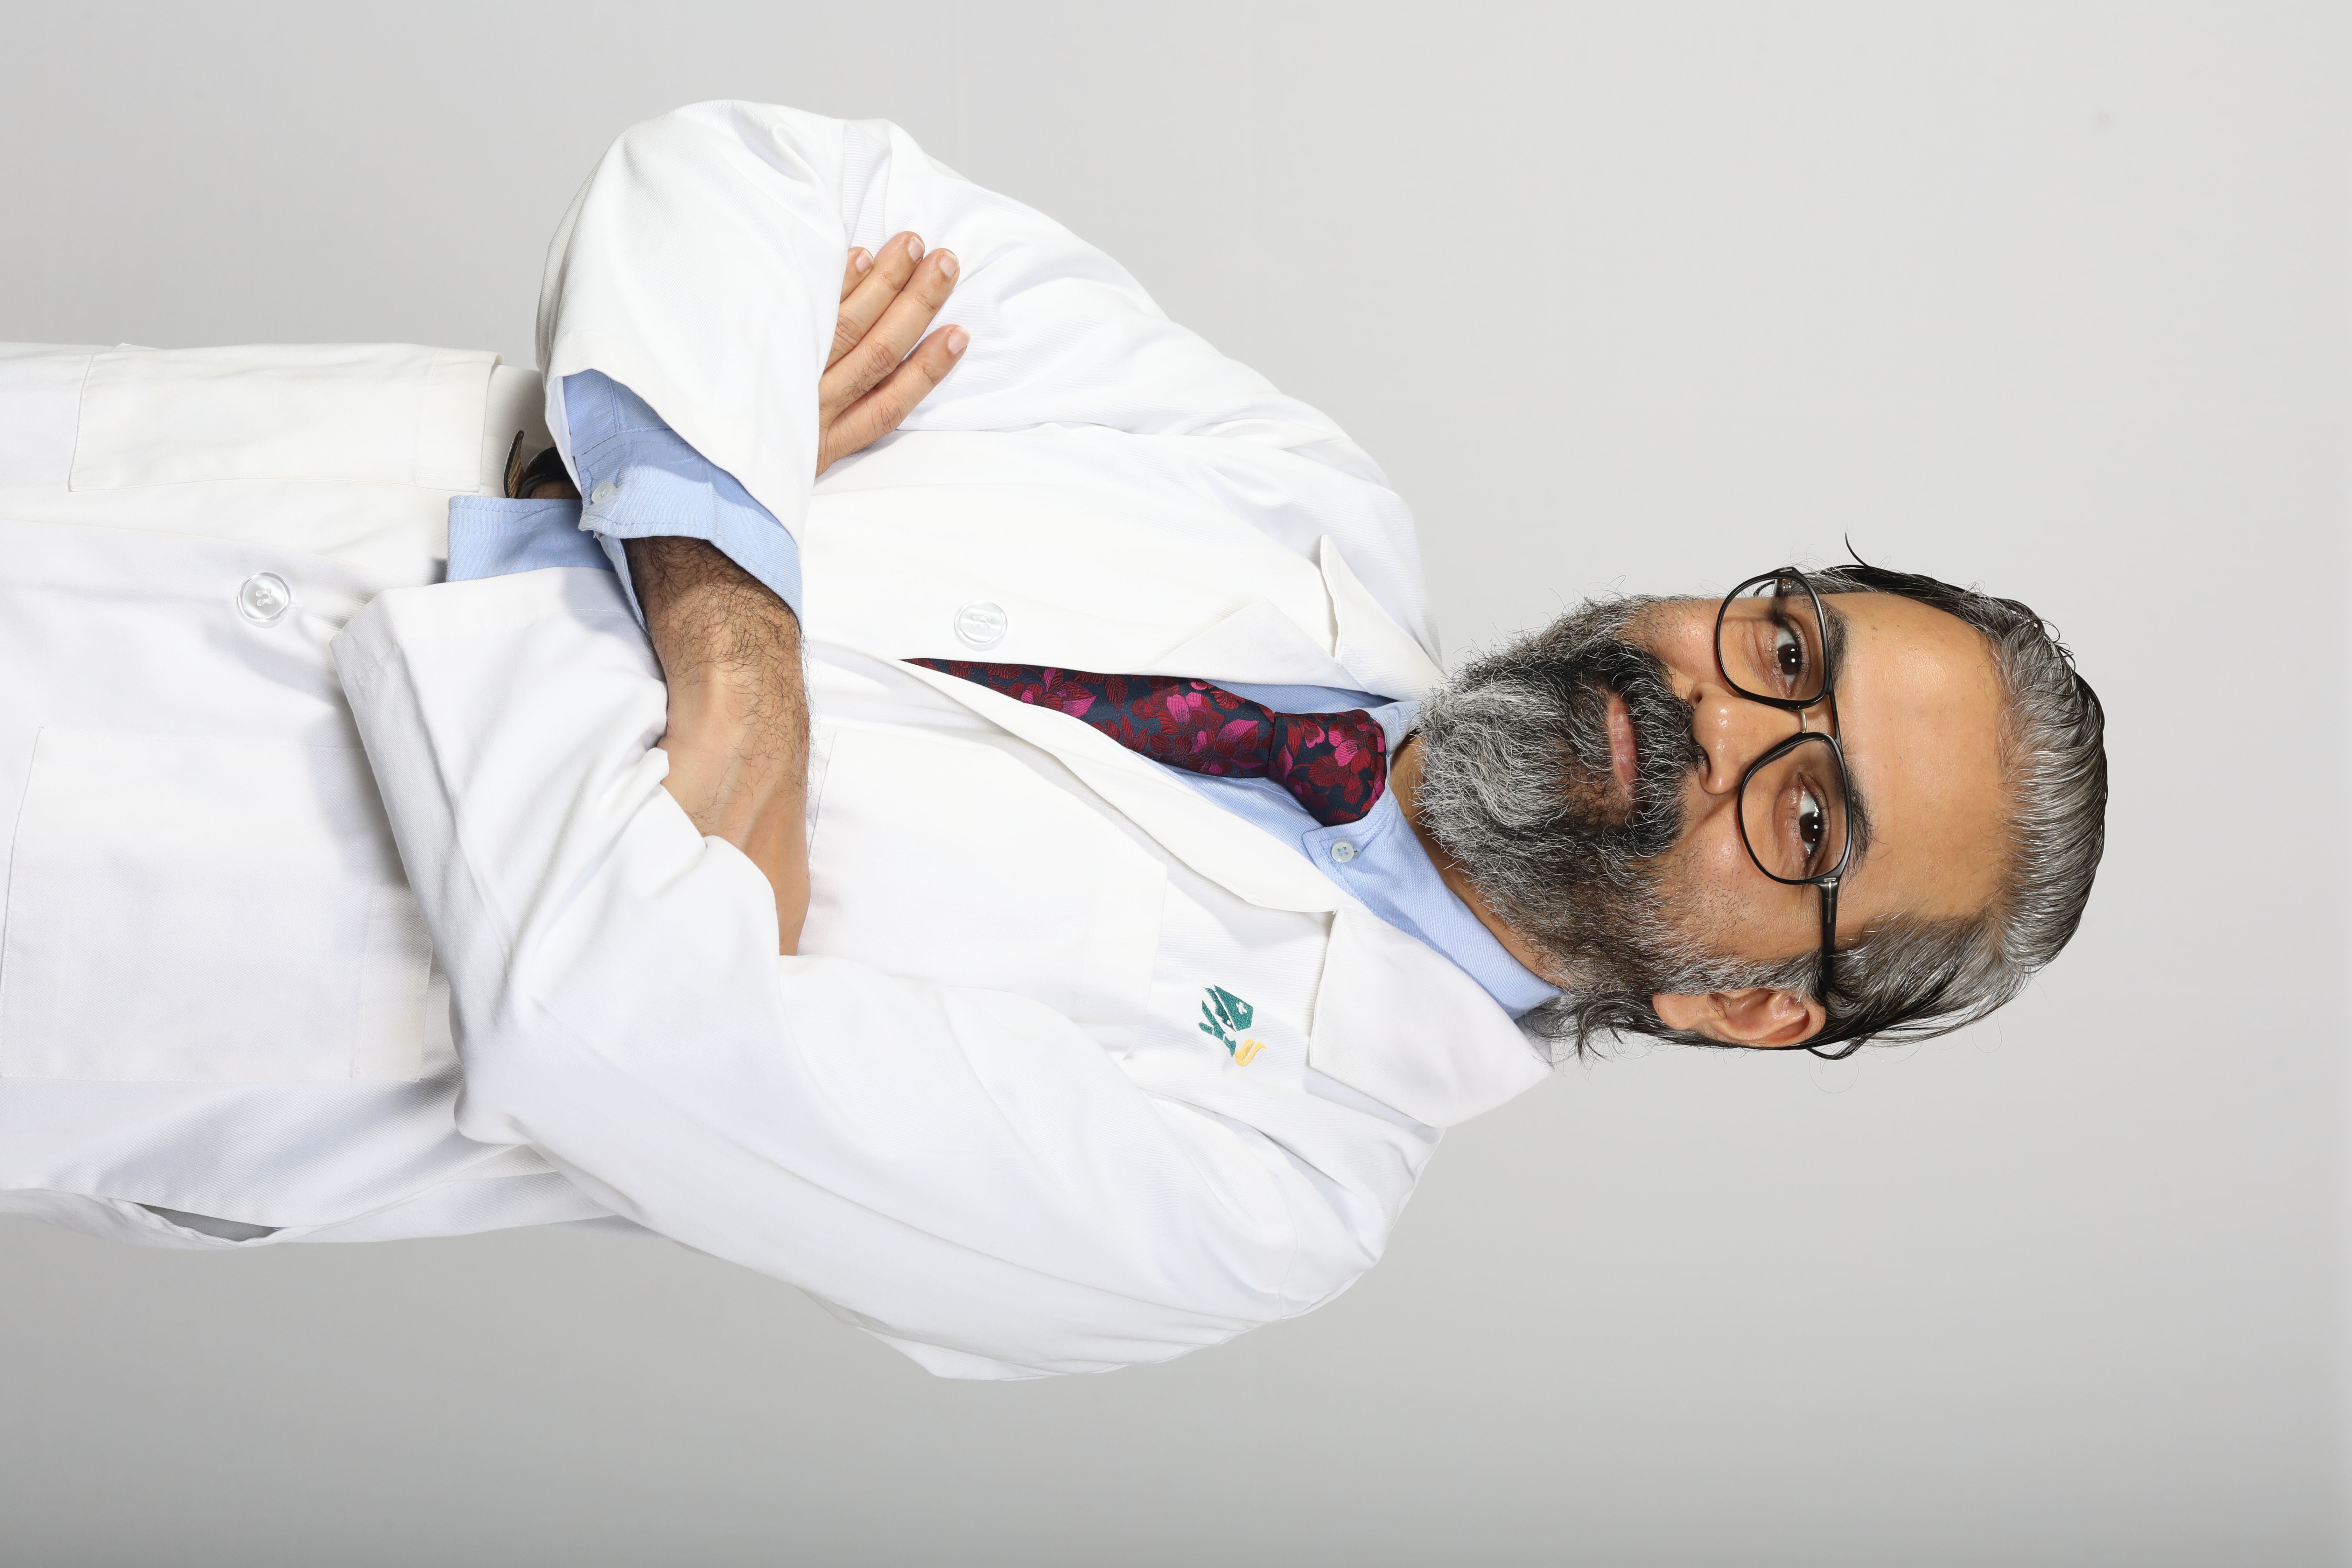 Dr RAHUL GUPTA cardiologist in Mumbai